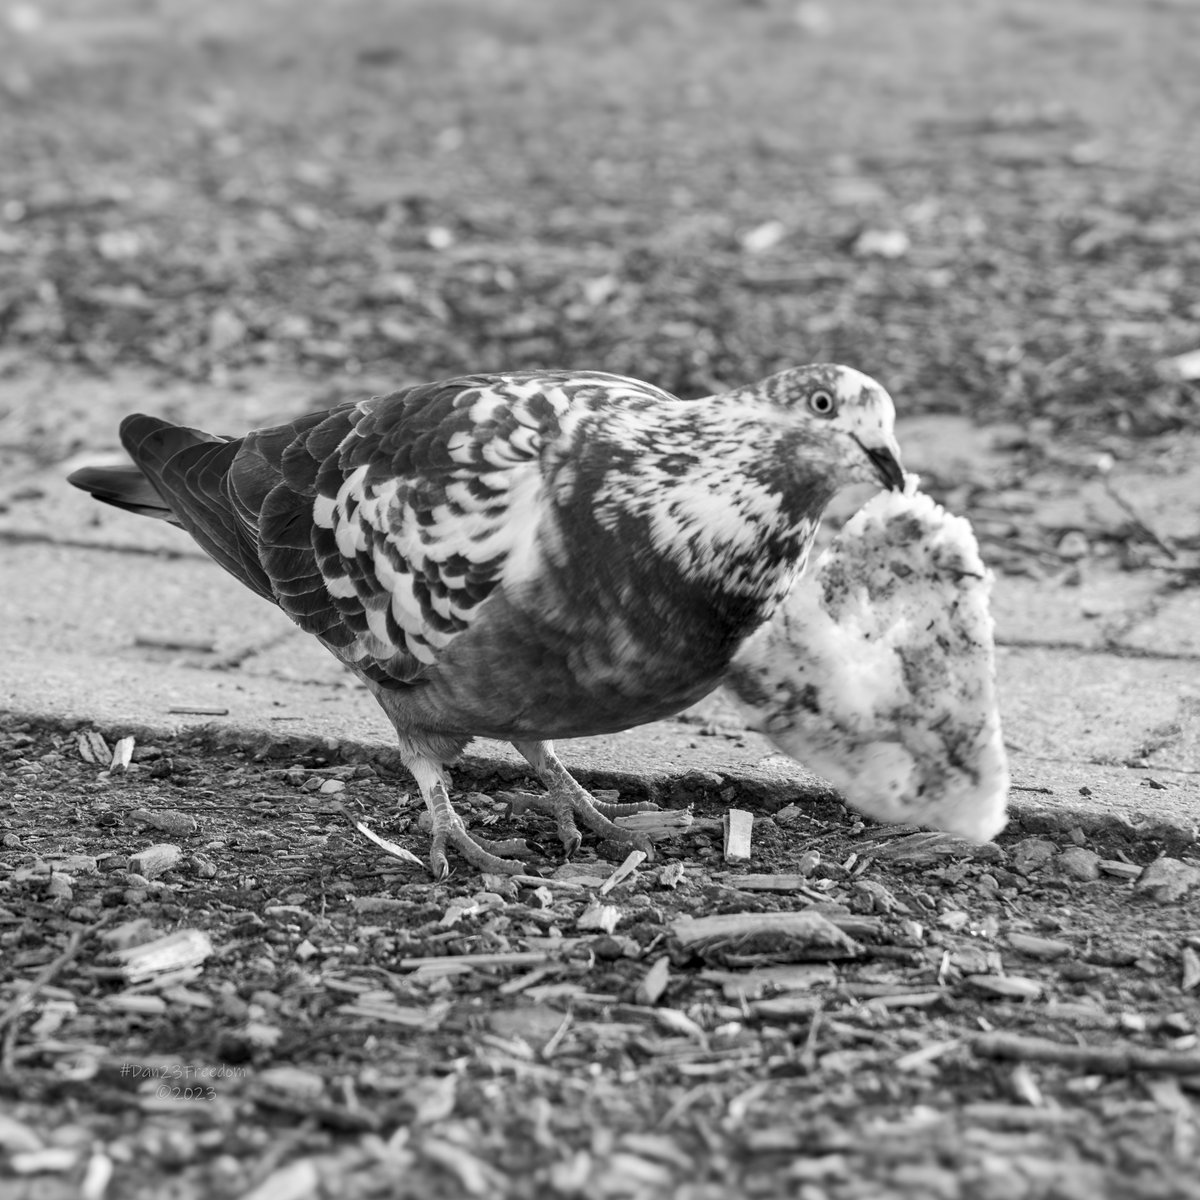 📷 1/350 sec at f/5,6, ISO 640, 75 mm (28-75) #dan23freedom
#monochrome #monochromatic #blackandwhite #birdphotography #birding #birds #birdwatching #birdstagram #instabird #bestbirds #pigeon #pigeonlove #pigeonfan #pigeonlife #taube #pizza